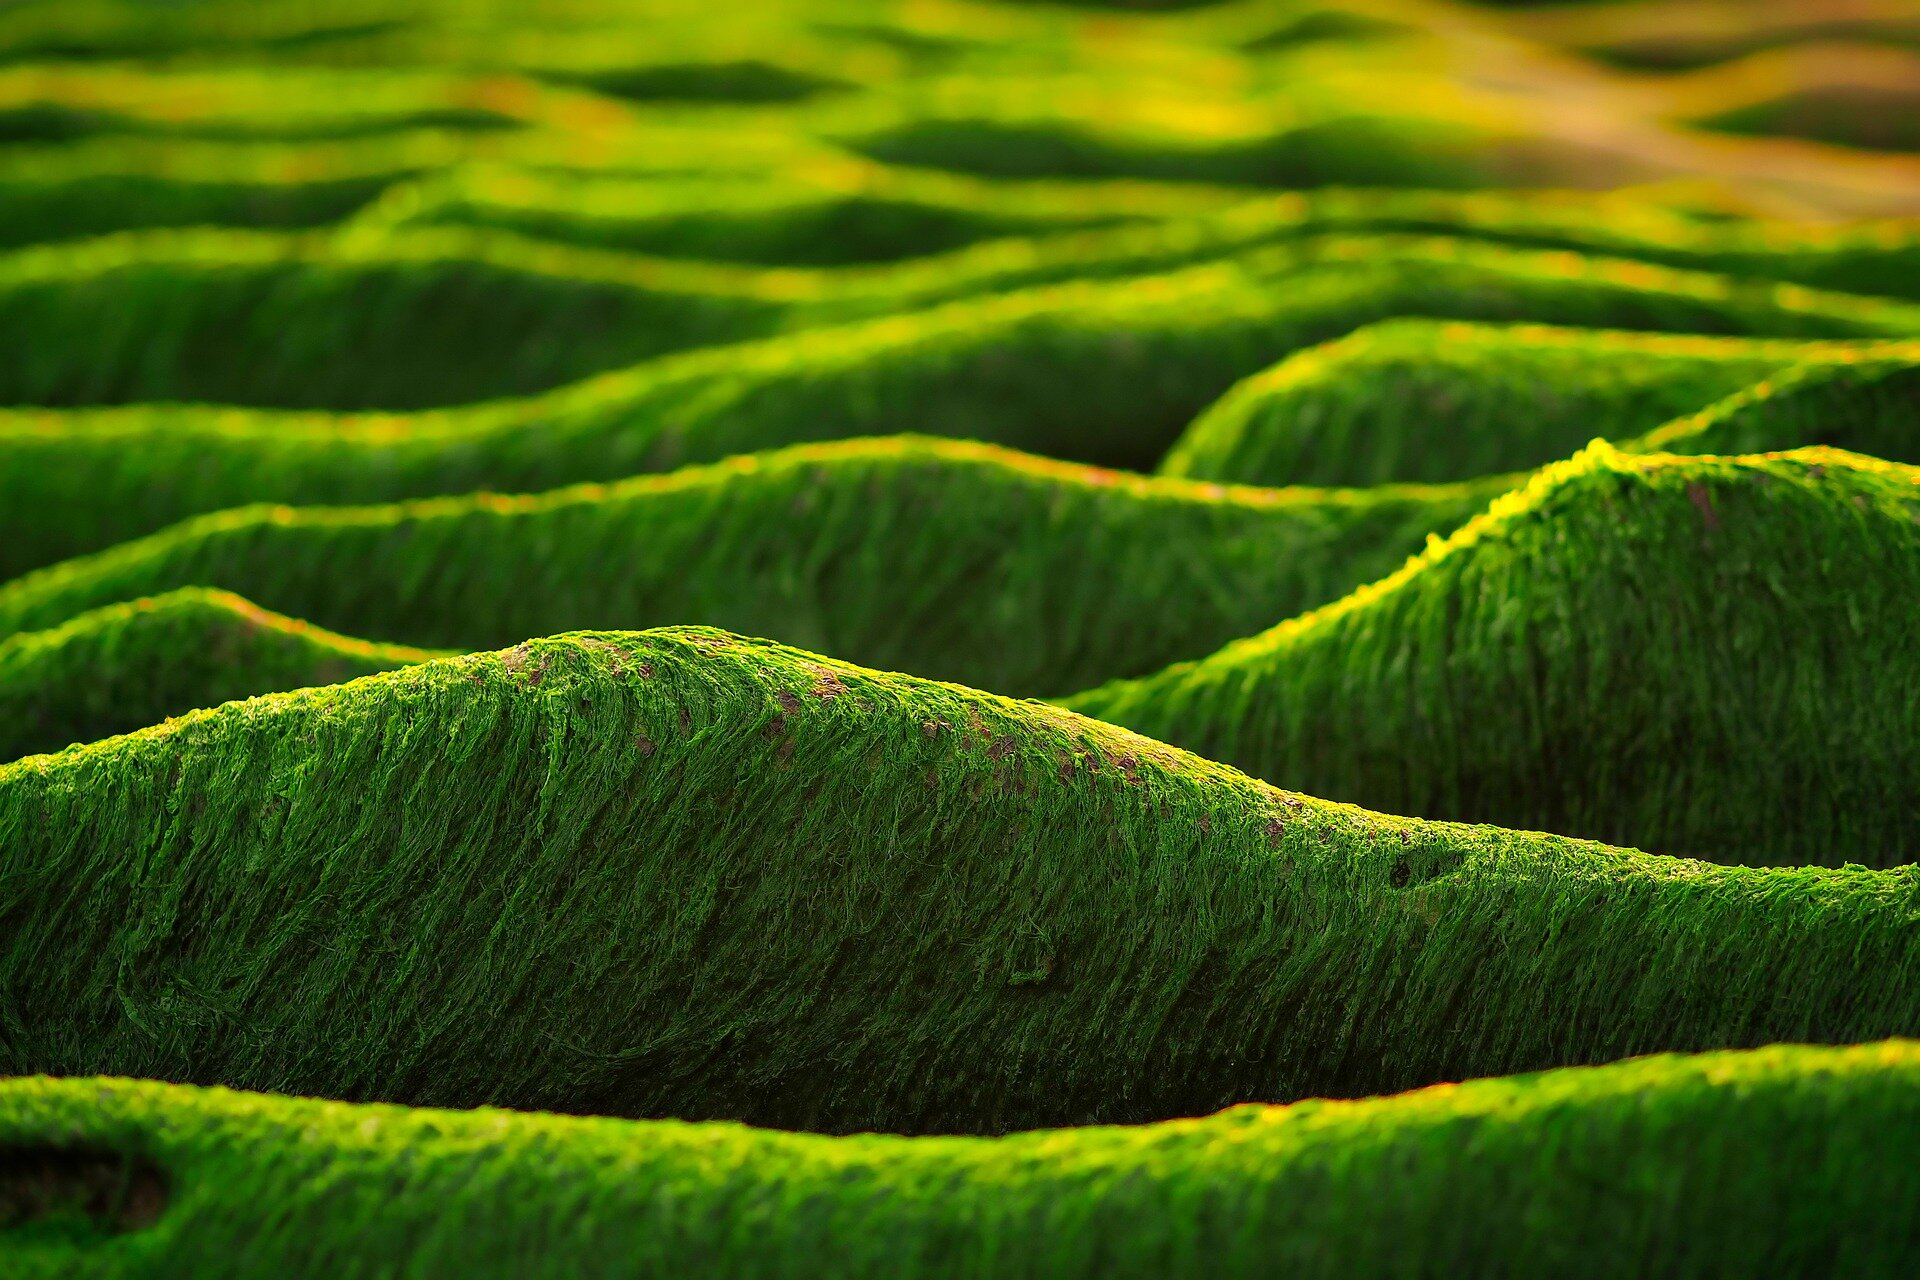 #Artificial intelligence predicts algae potential as alternative energy source